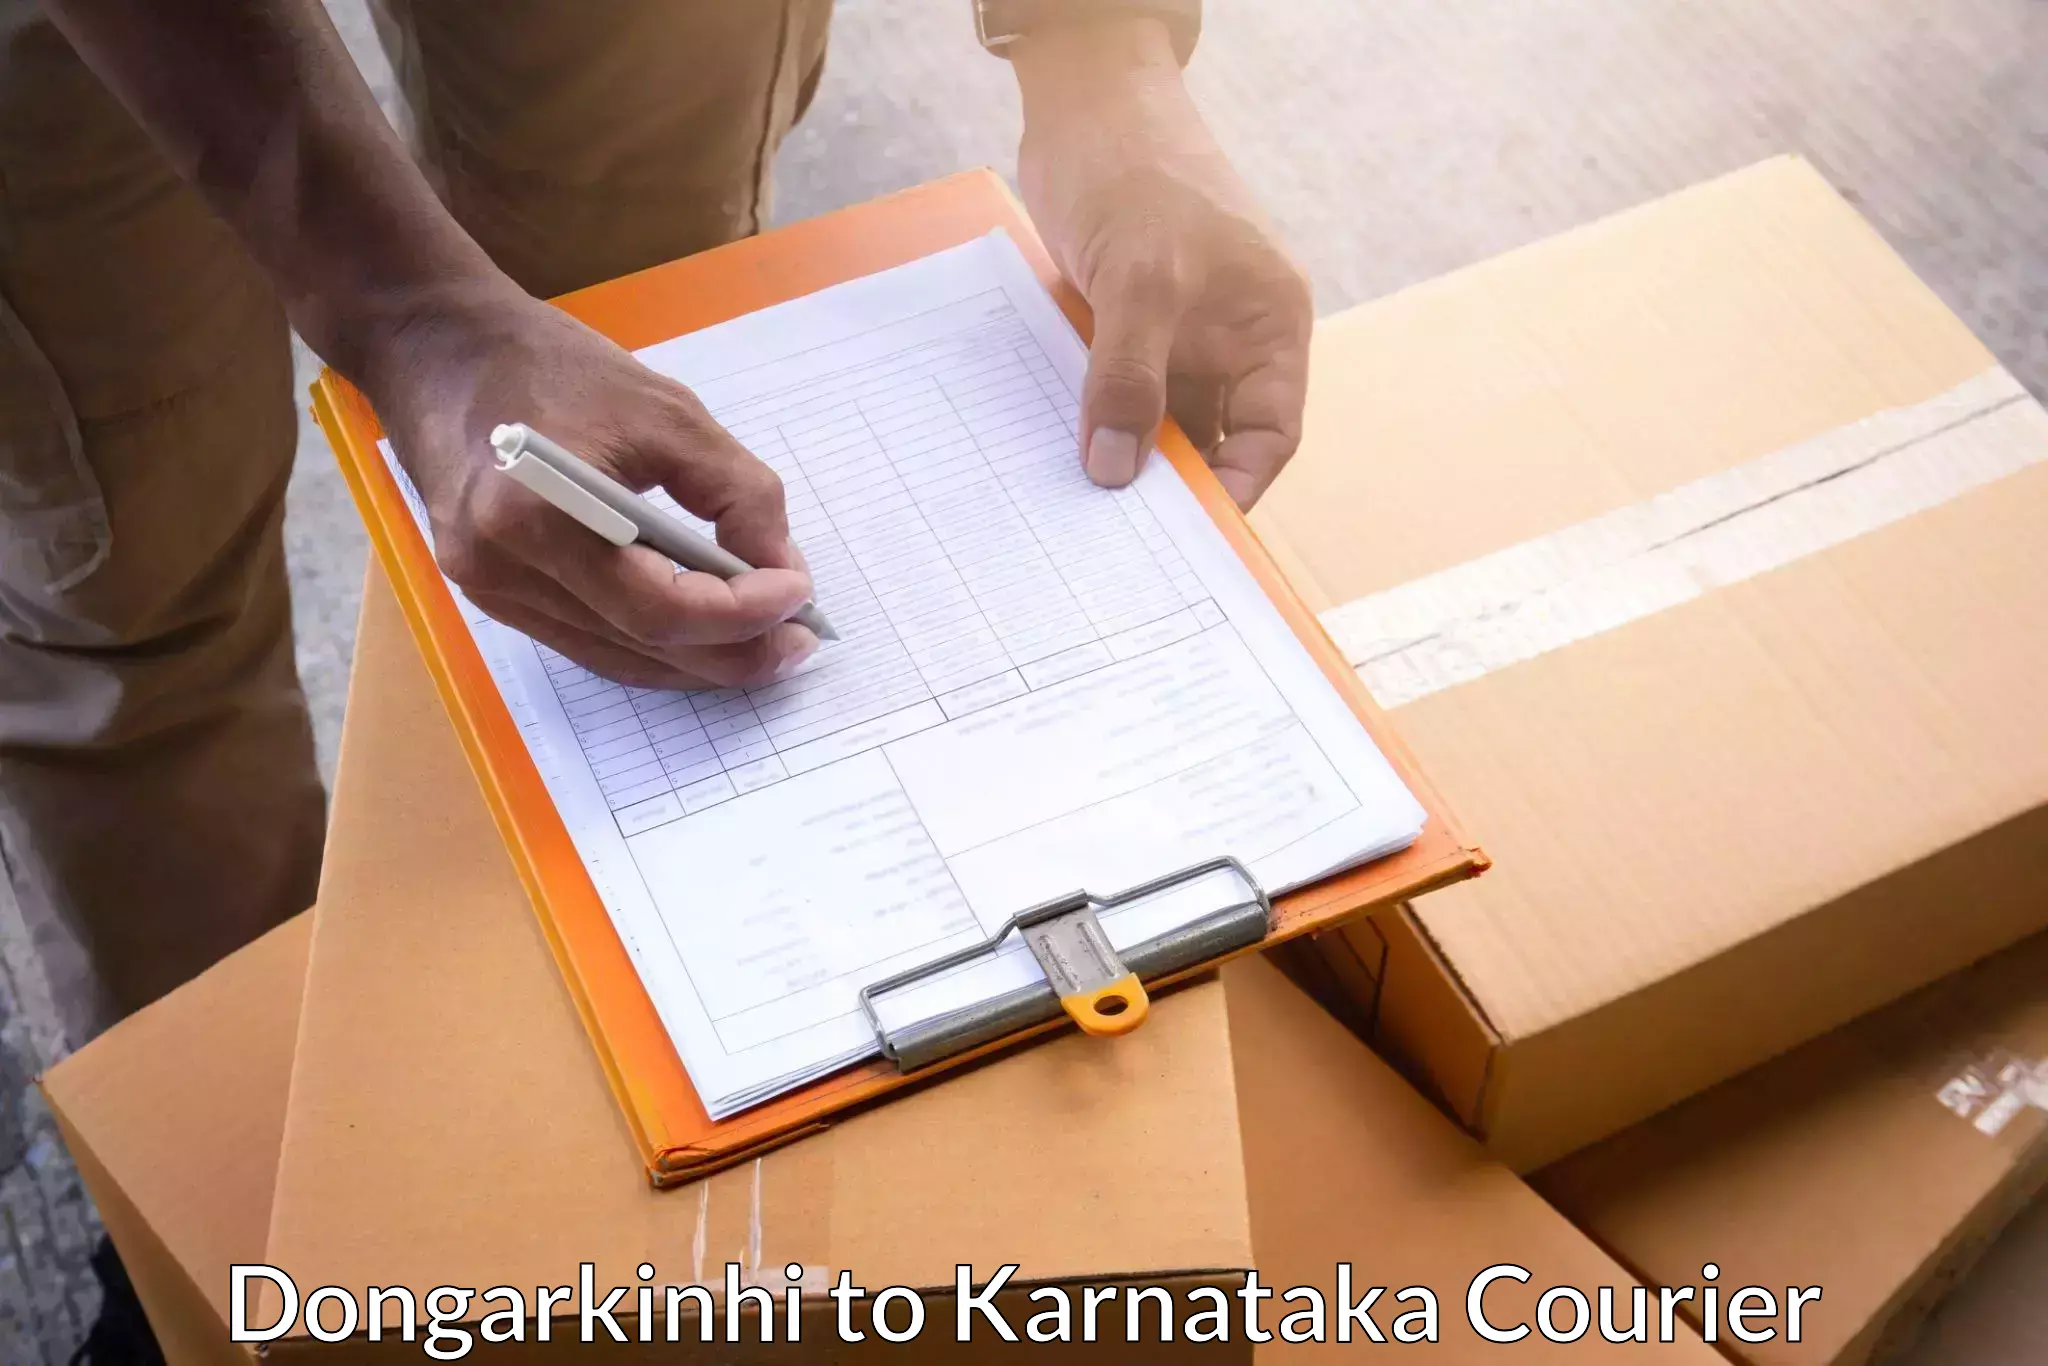 On-call courier service Dongarkinhi to Karnataka